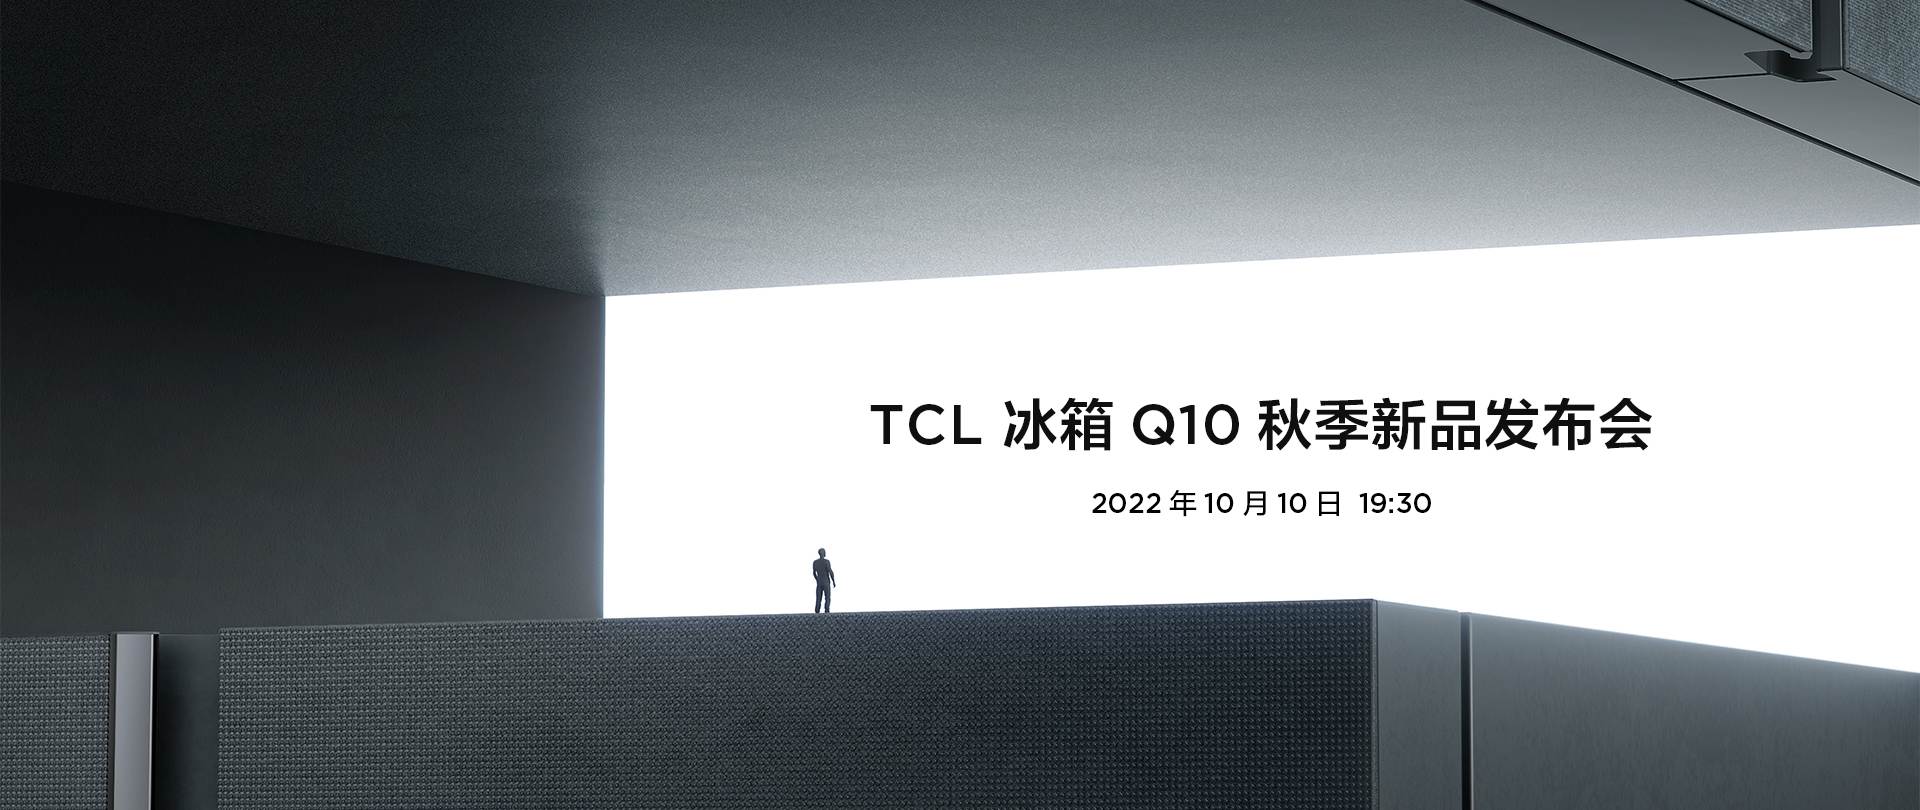 TCL 冰箱Q10秋季新品发布会